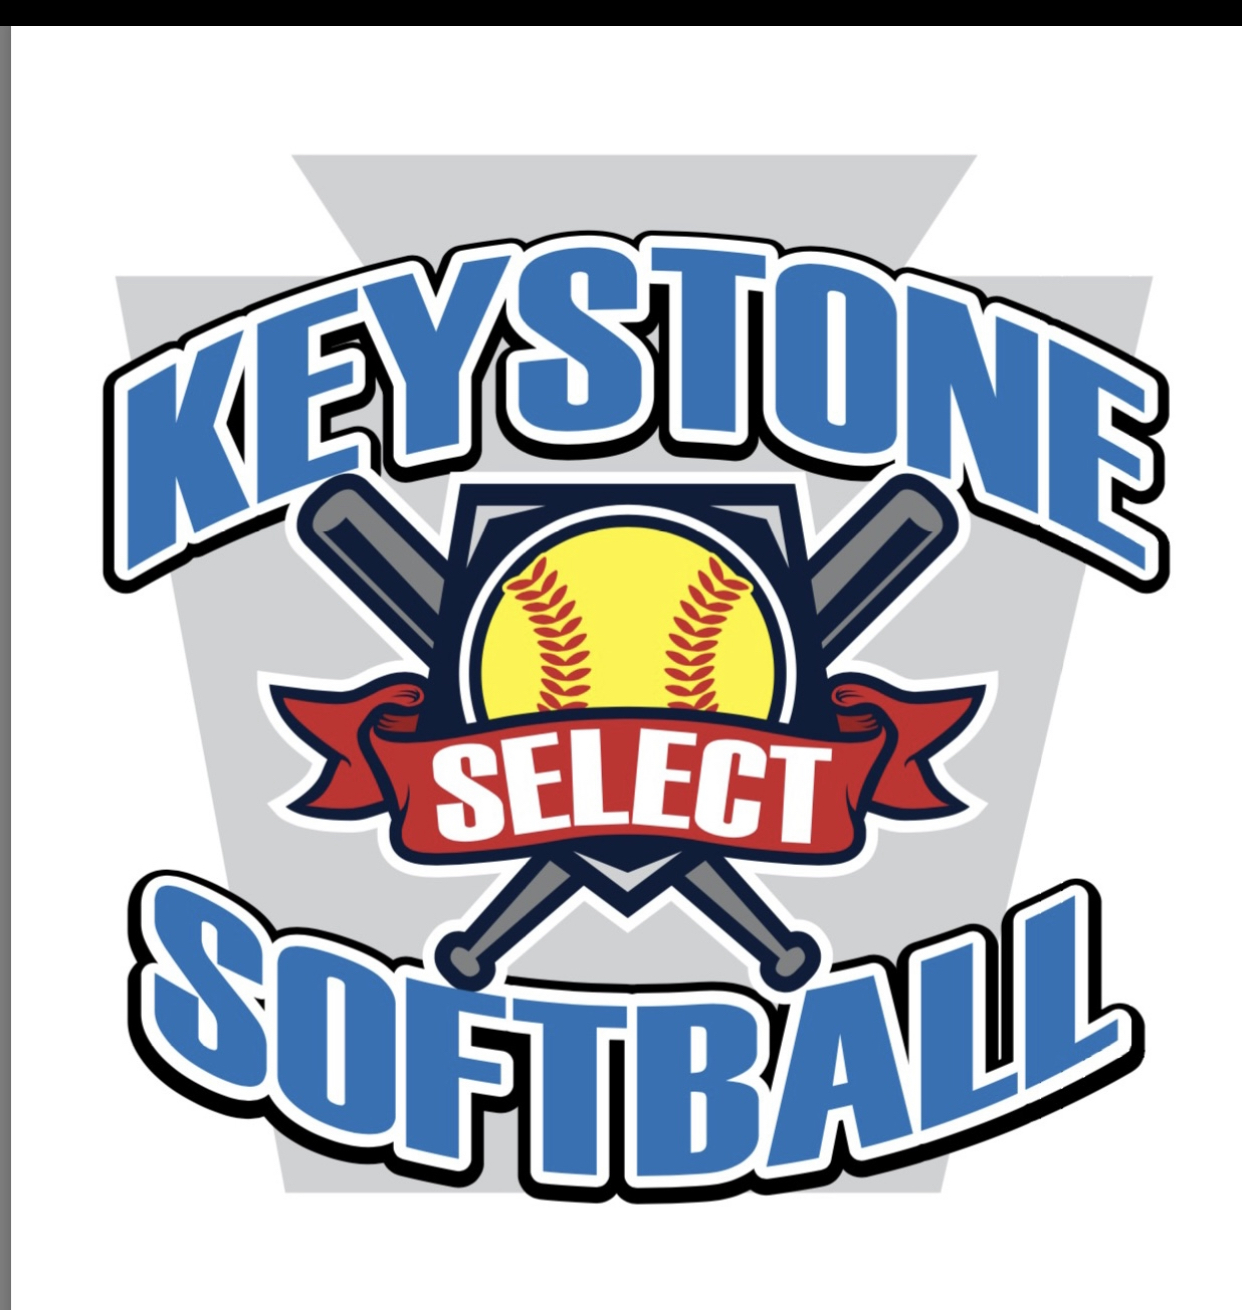 Keystone Select Softball 12th Annual Monster Bash Williamsport PA Logo